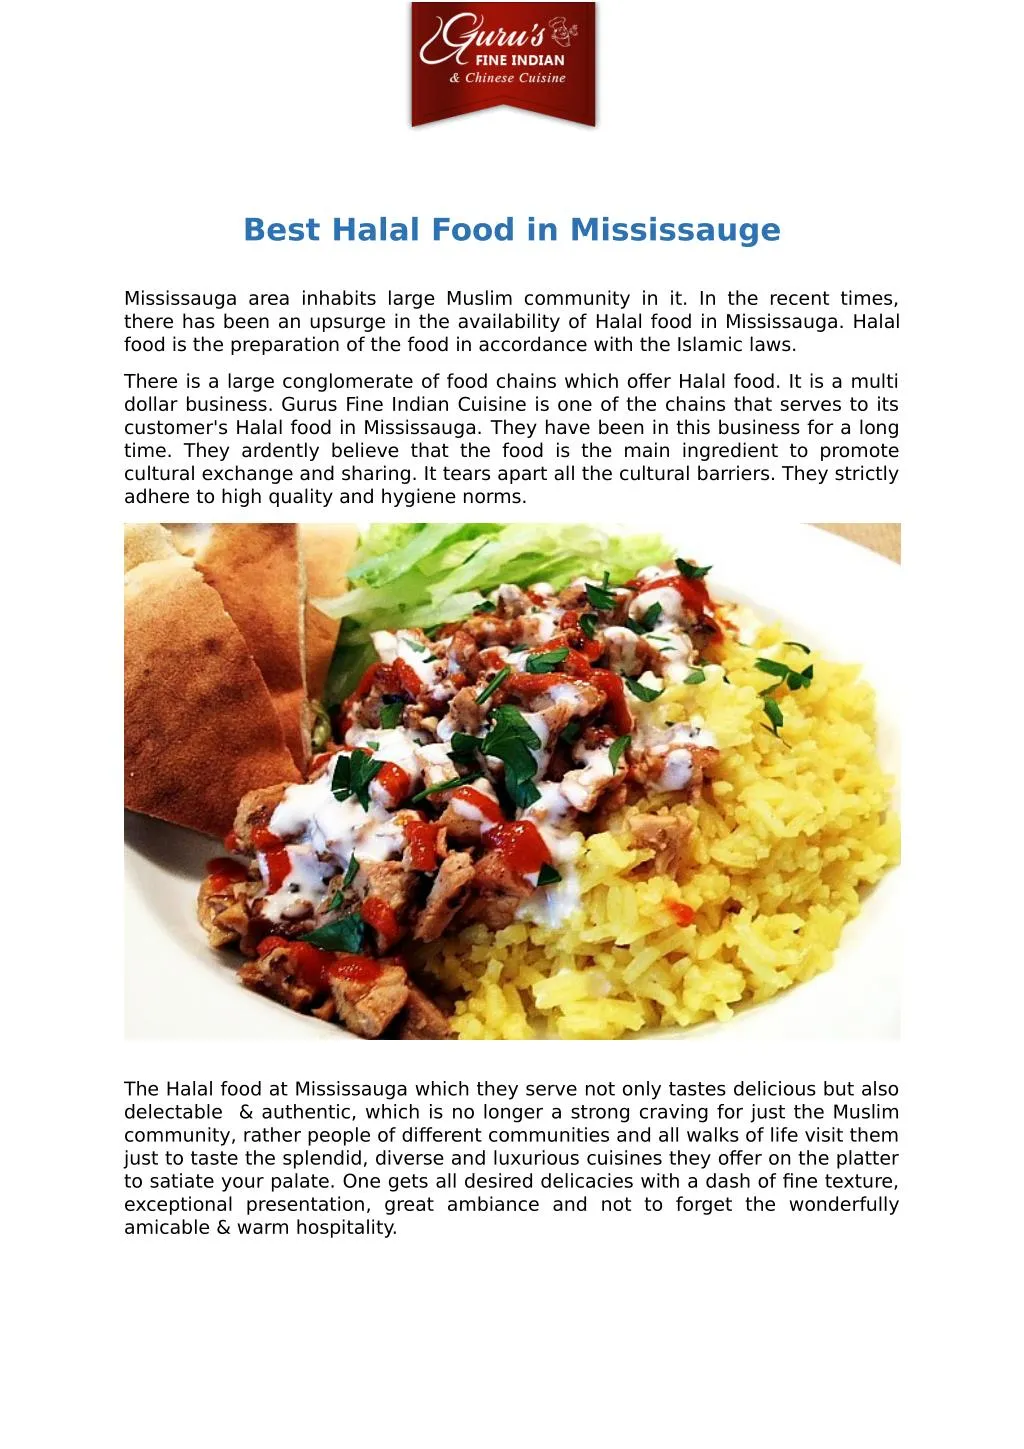 PPT - Best Halal Food in Mississauge PowerPoint Presentation, free